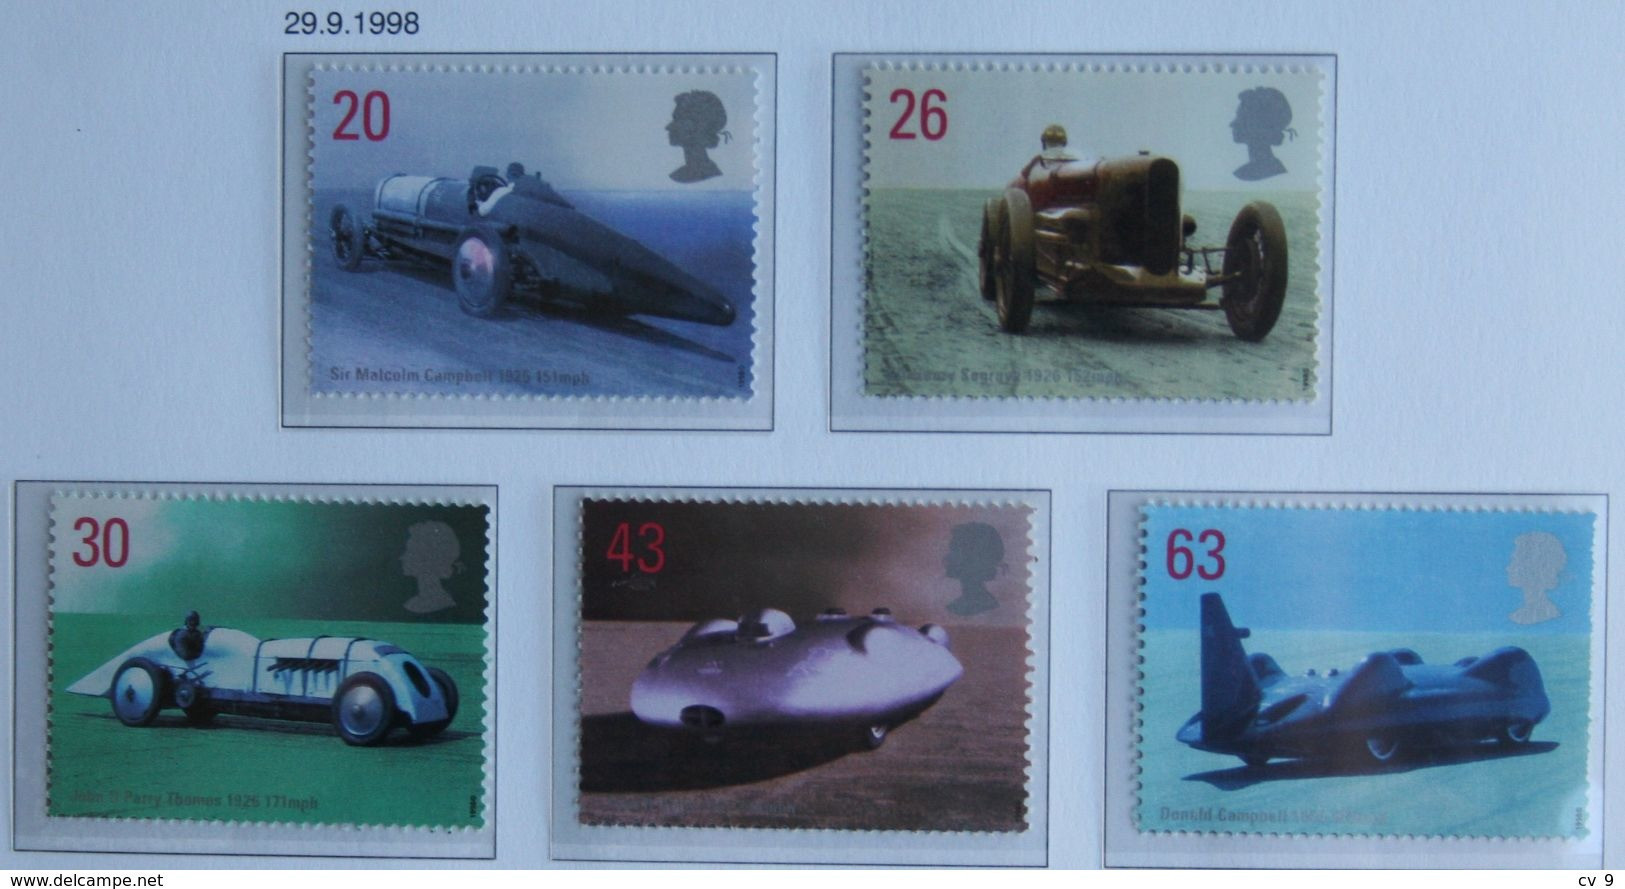 Car Science Velocity Physics (Mi 1767-1771) 1998 POSTFRIS MNH ** ENGLAND GRANDE-BRETAGNE GB GREAT BRITAIN - Unused Stamps